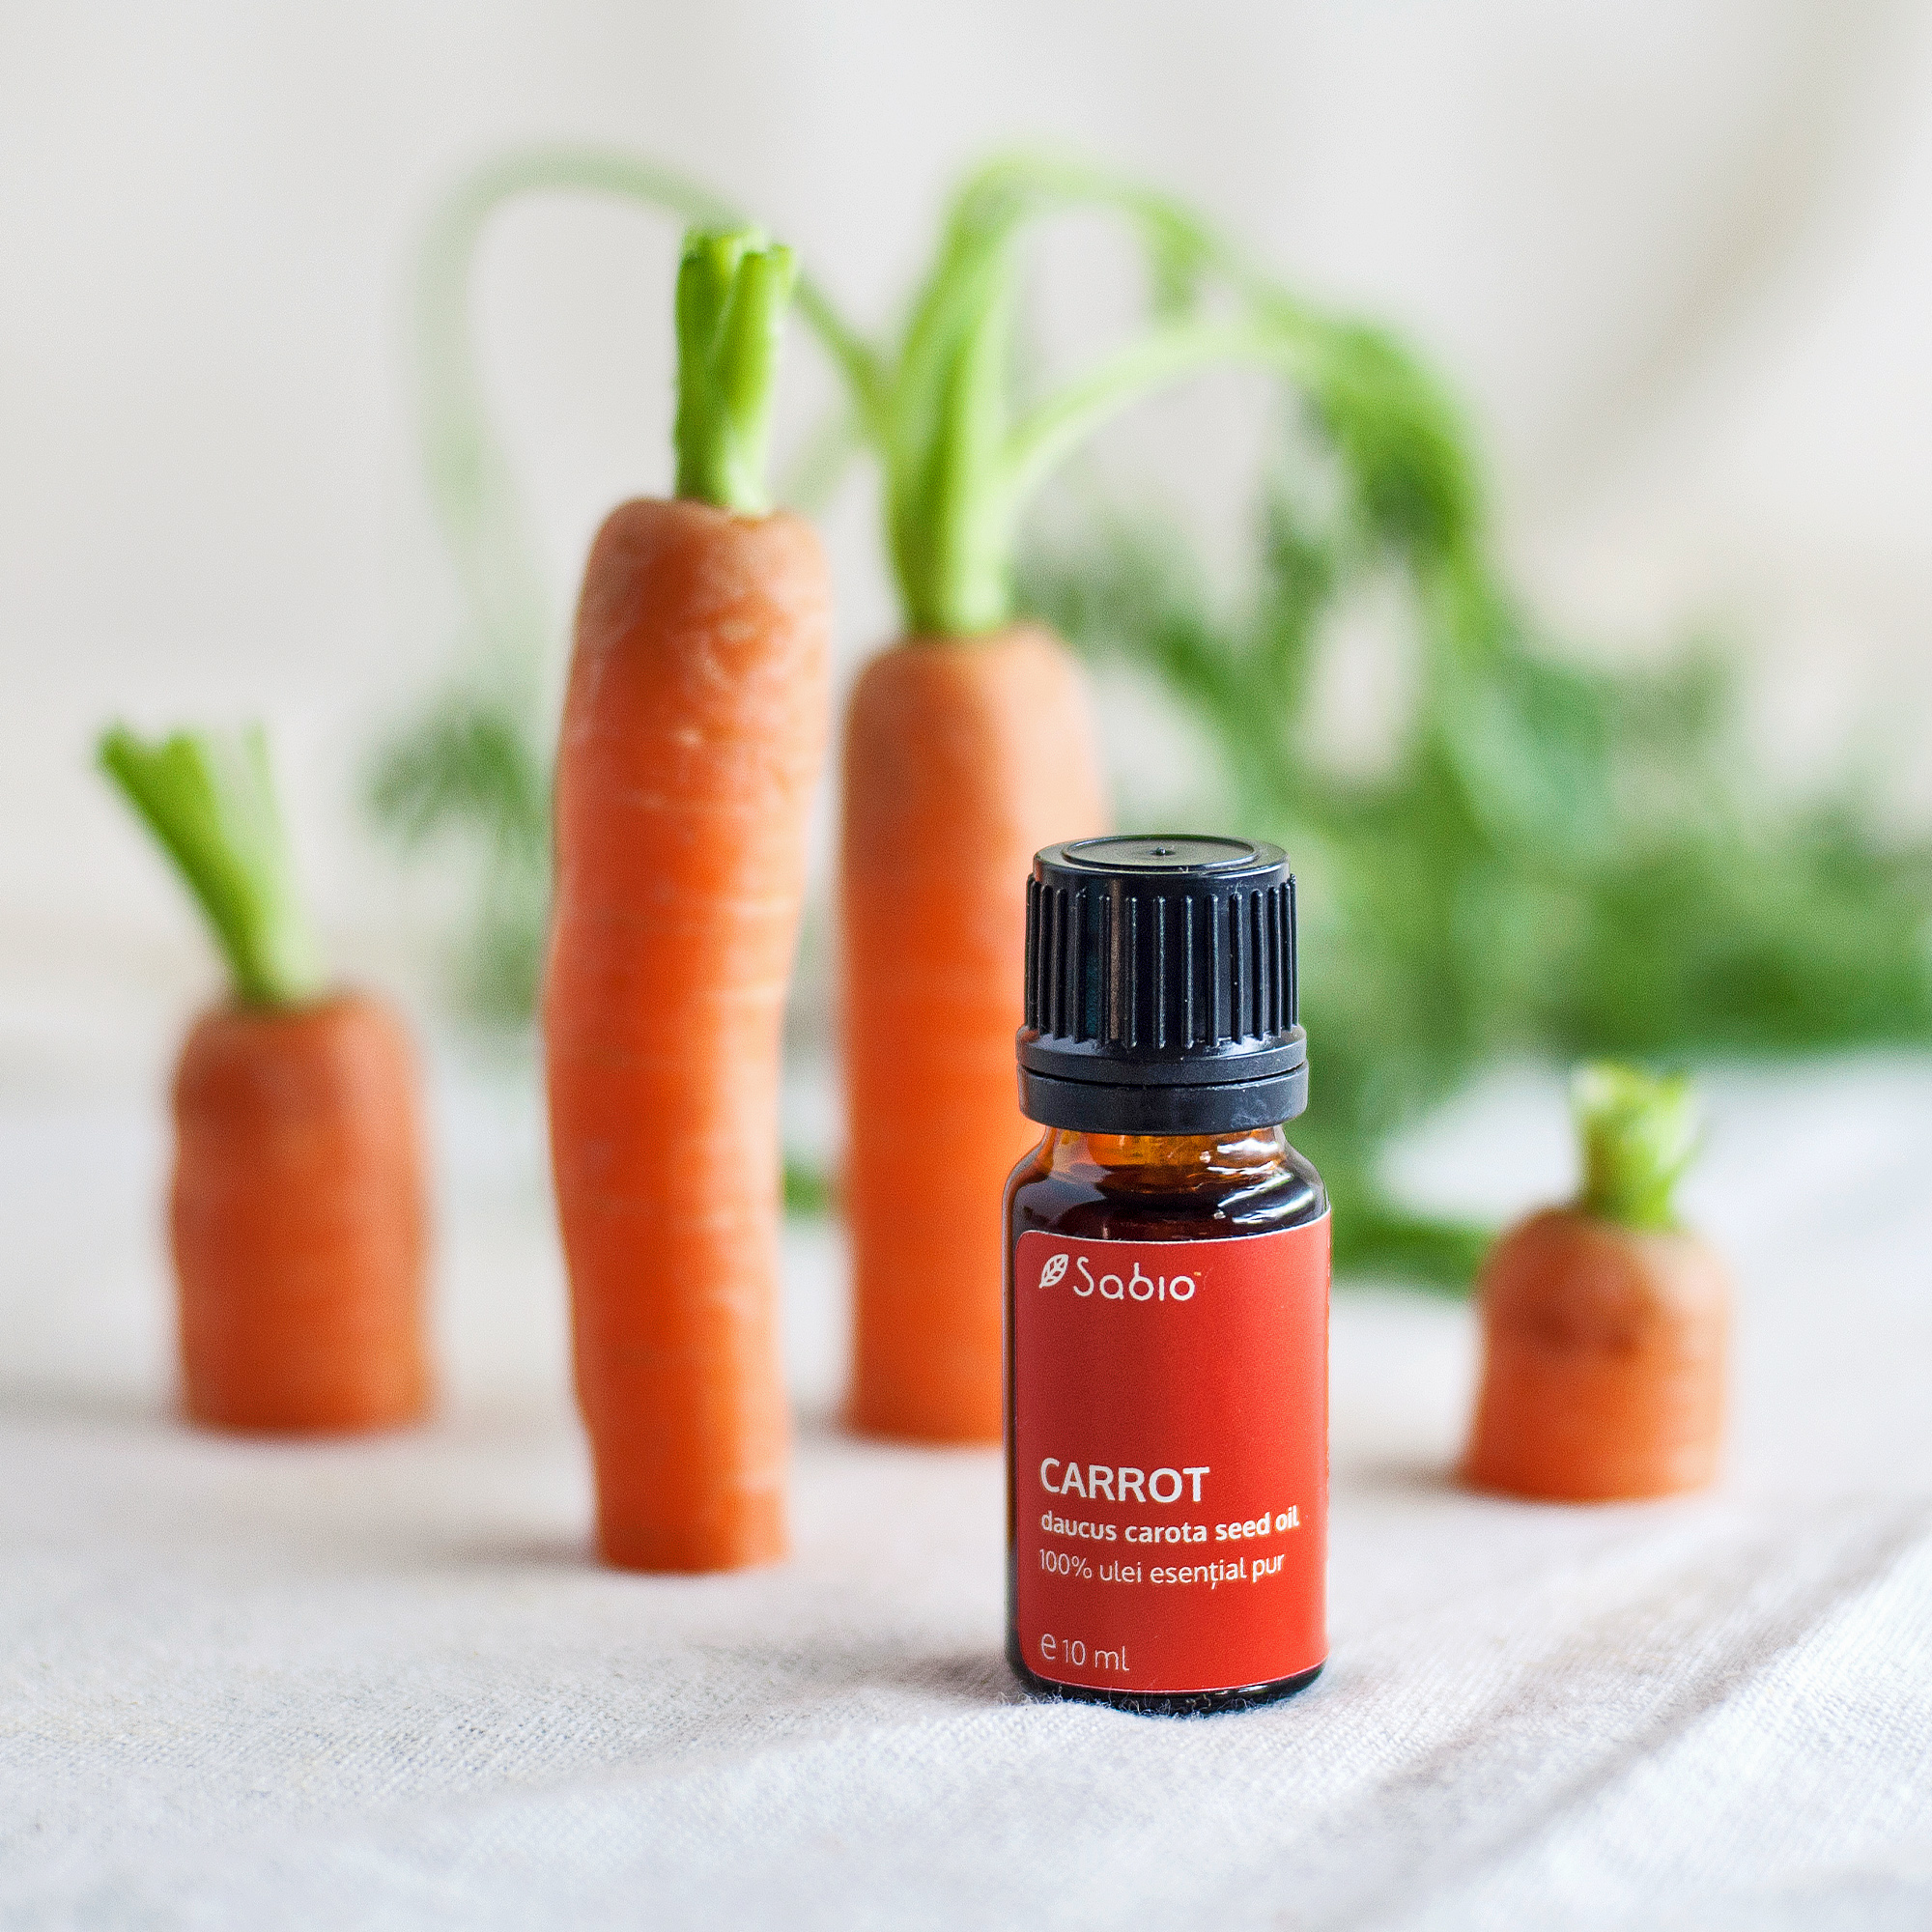 Carrot essential oil